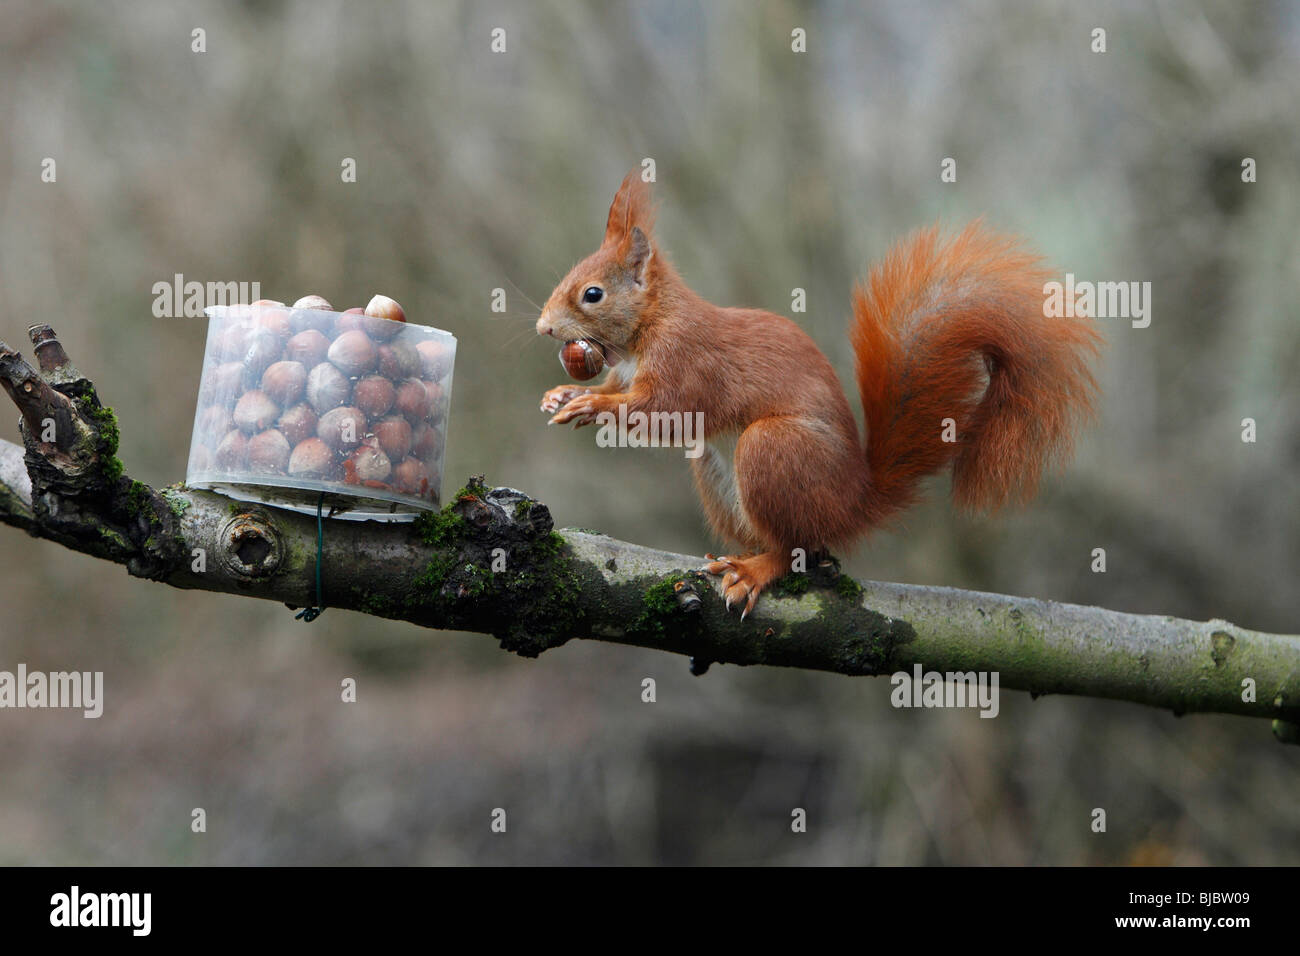 European Red Squirrel (Sciurus vulgaris), taking hazelnut from feeding station in garden, autumn Stock Photo